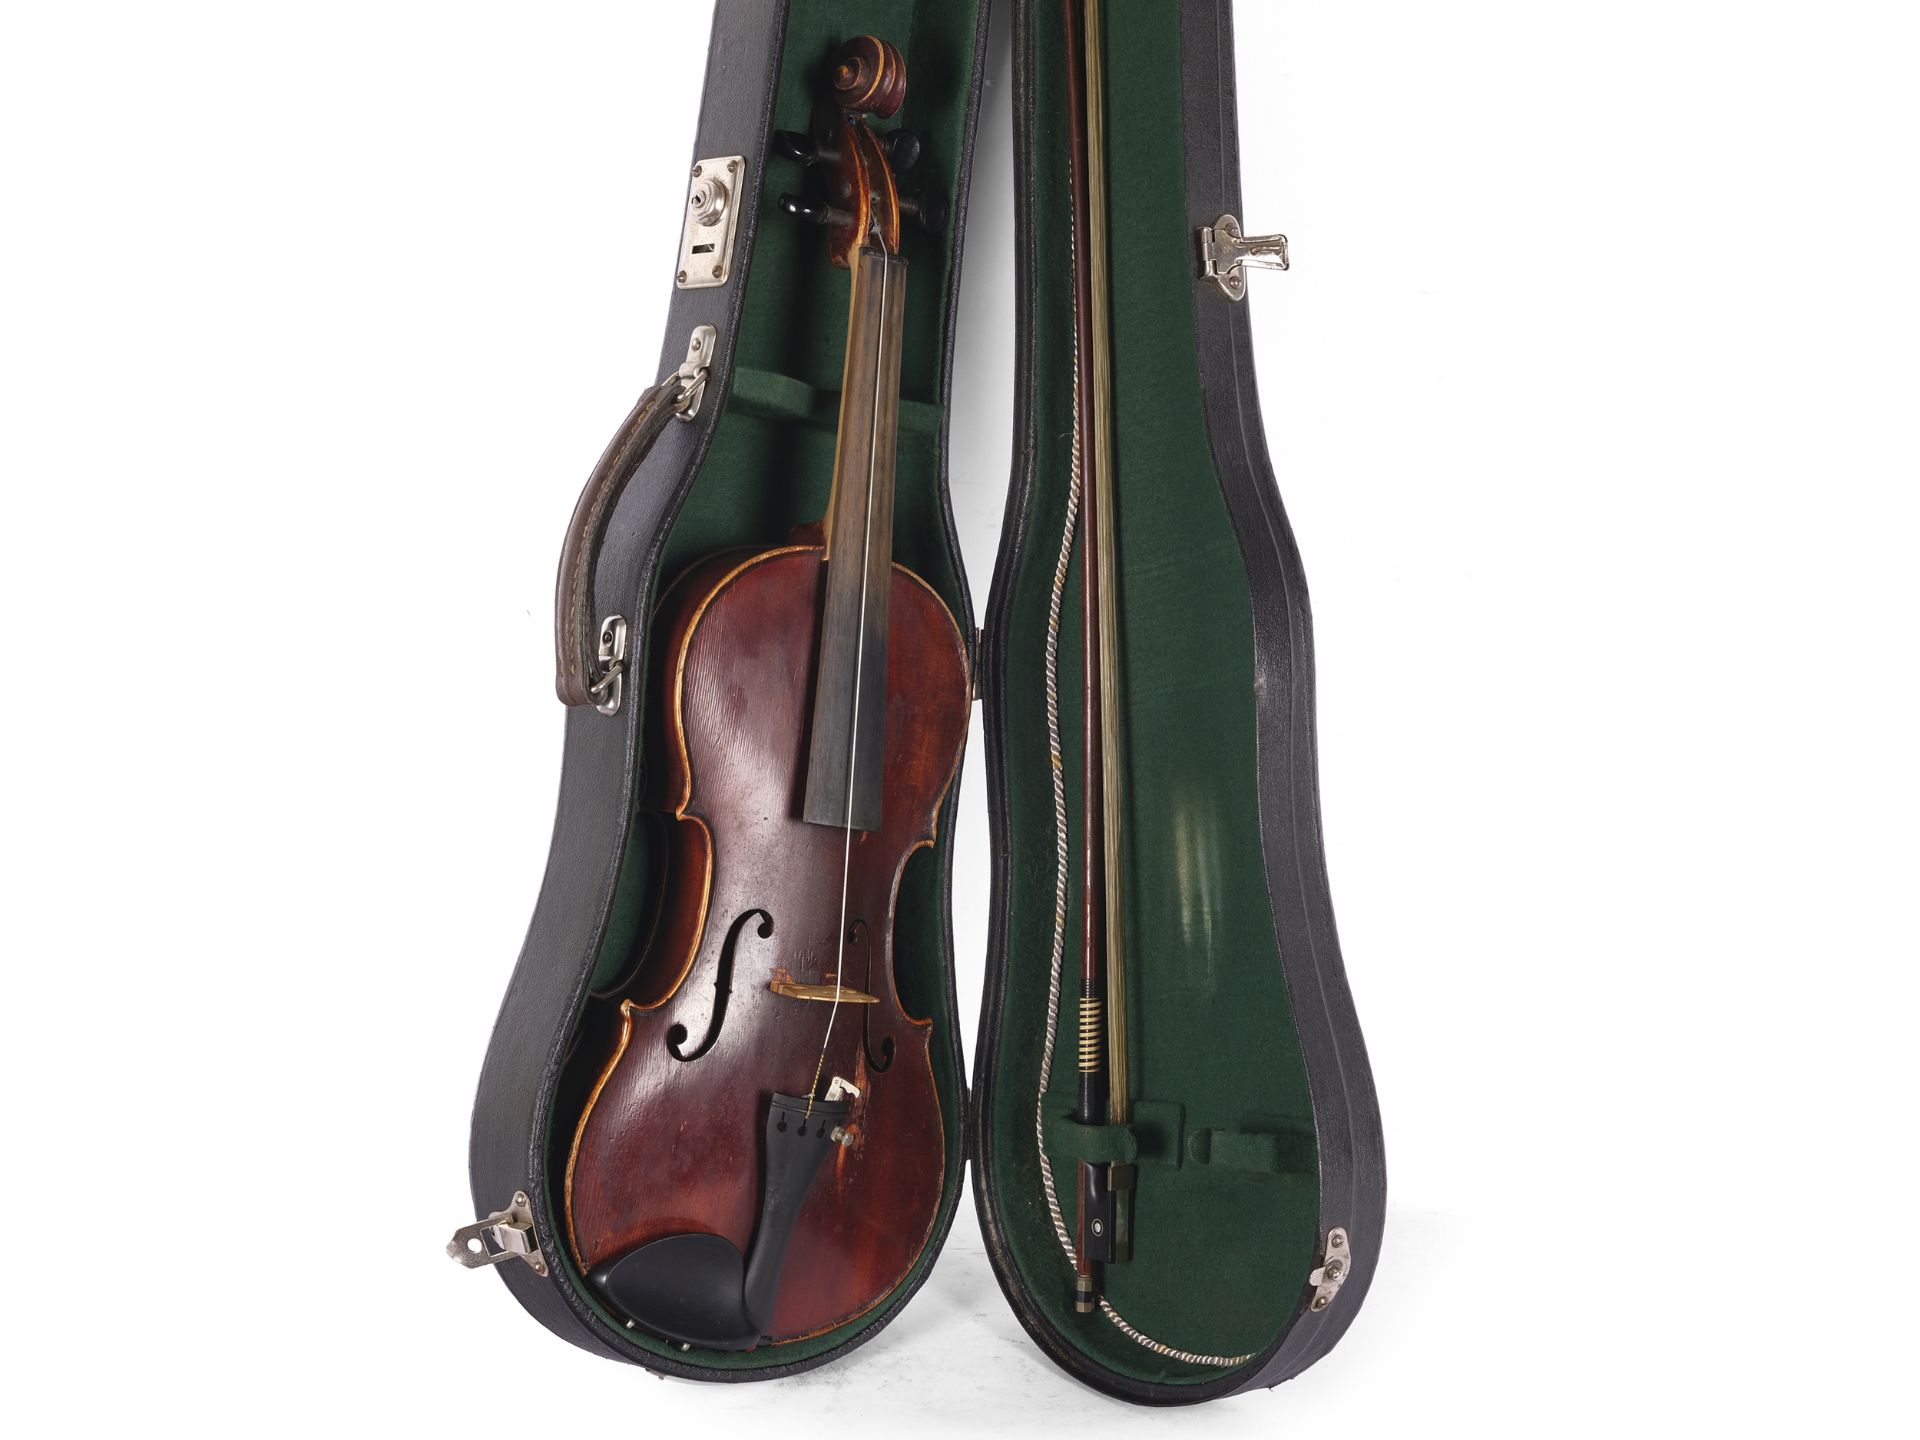 3/4 violin by Neuner and Hornsteiner, Mittenwald - Image 2 of 4